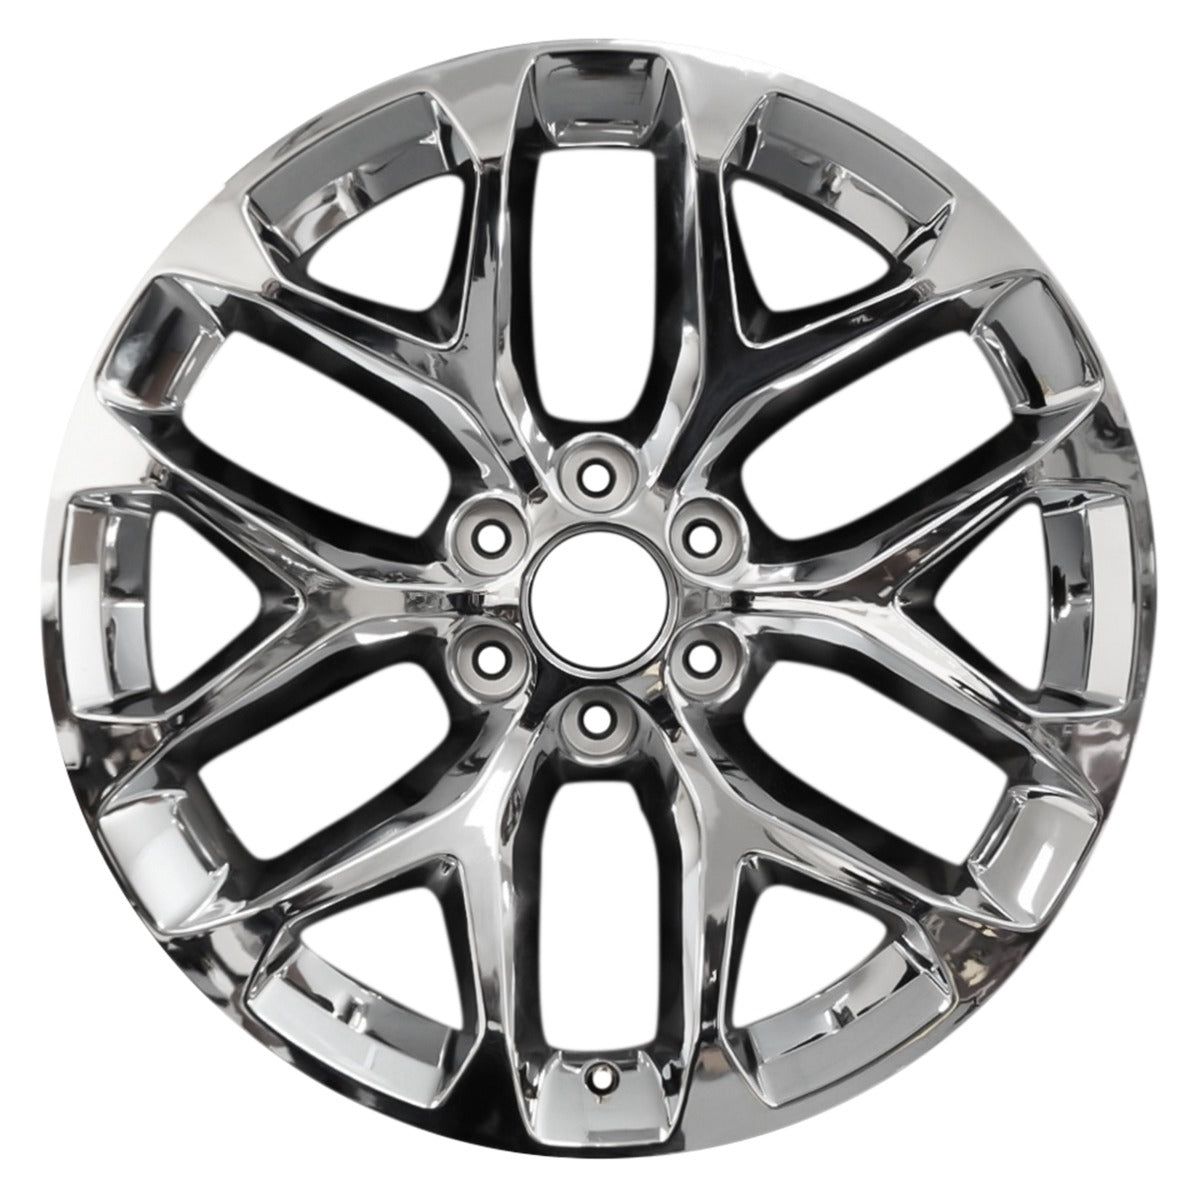 2014 Chevrolet Silverado 1500 22" OEM Wheel Rim W5668CHR